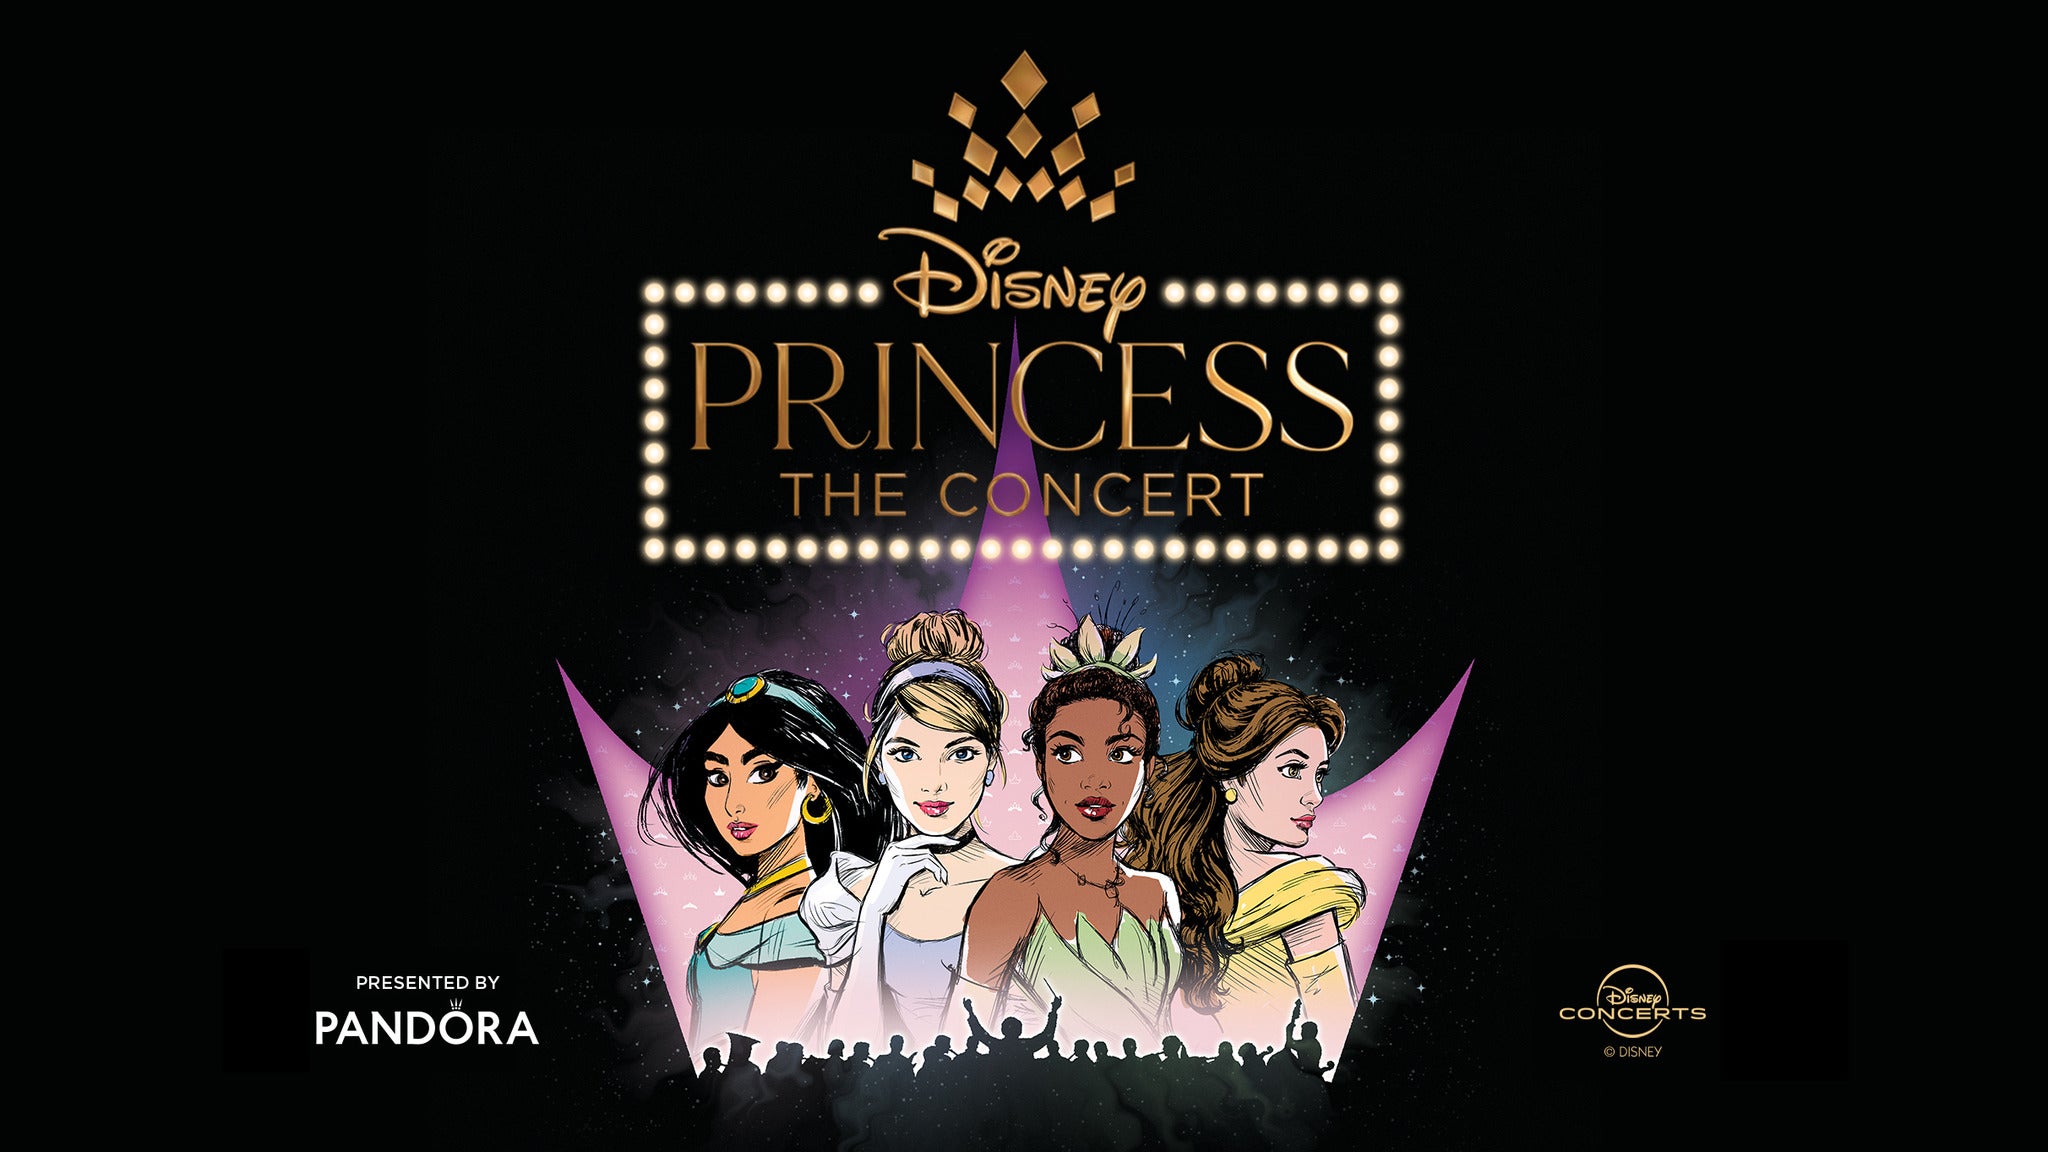 Pandora Presents Disney Princess: The Concert